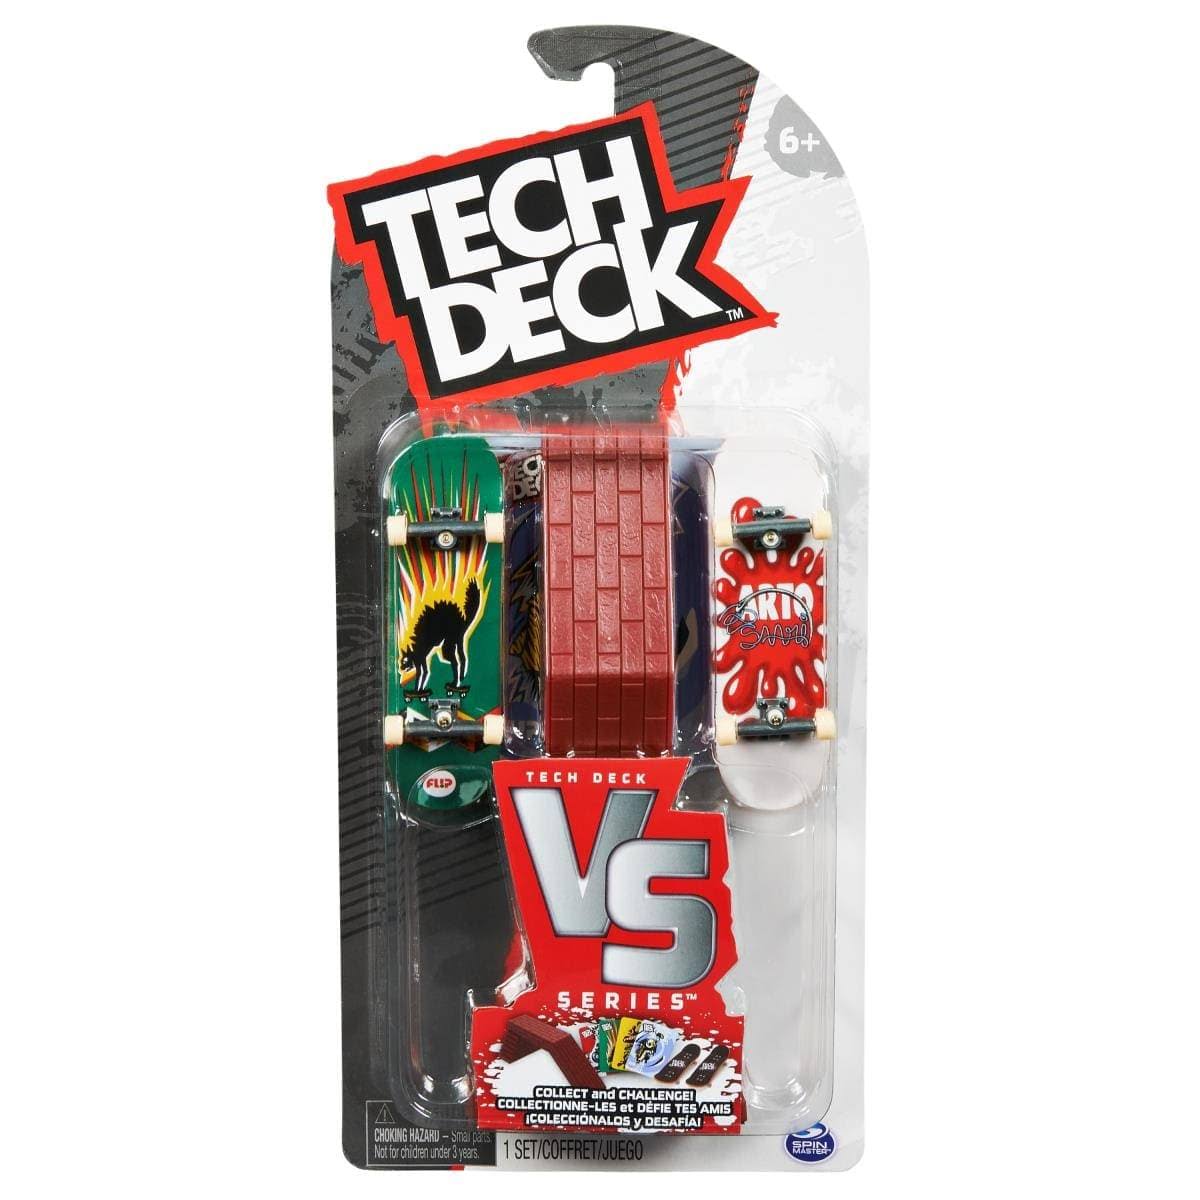 Tech Deck VS Series - Flip